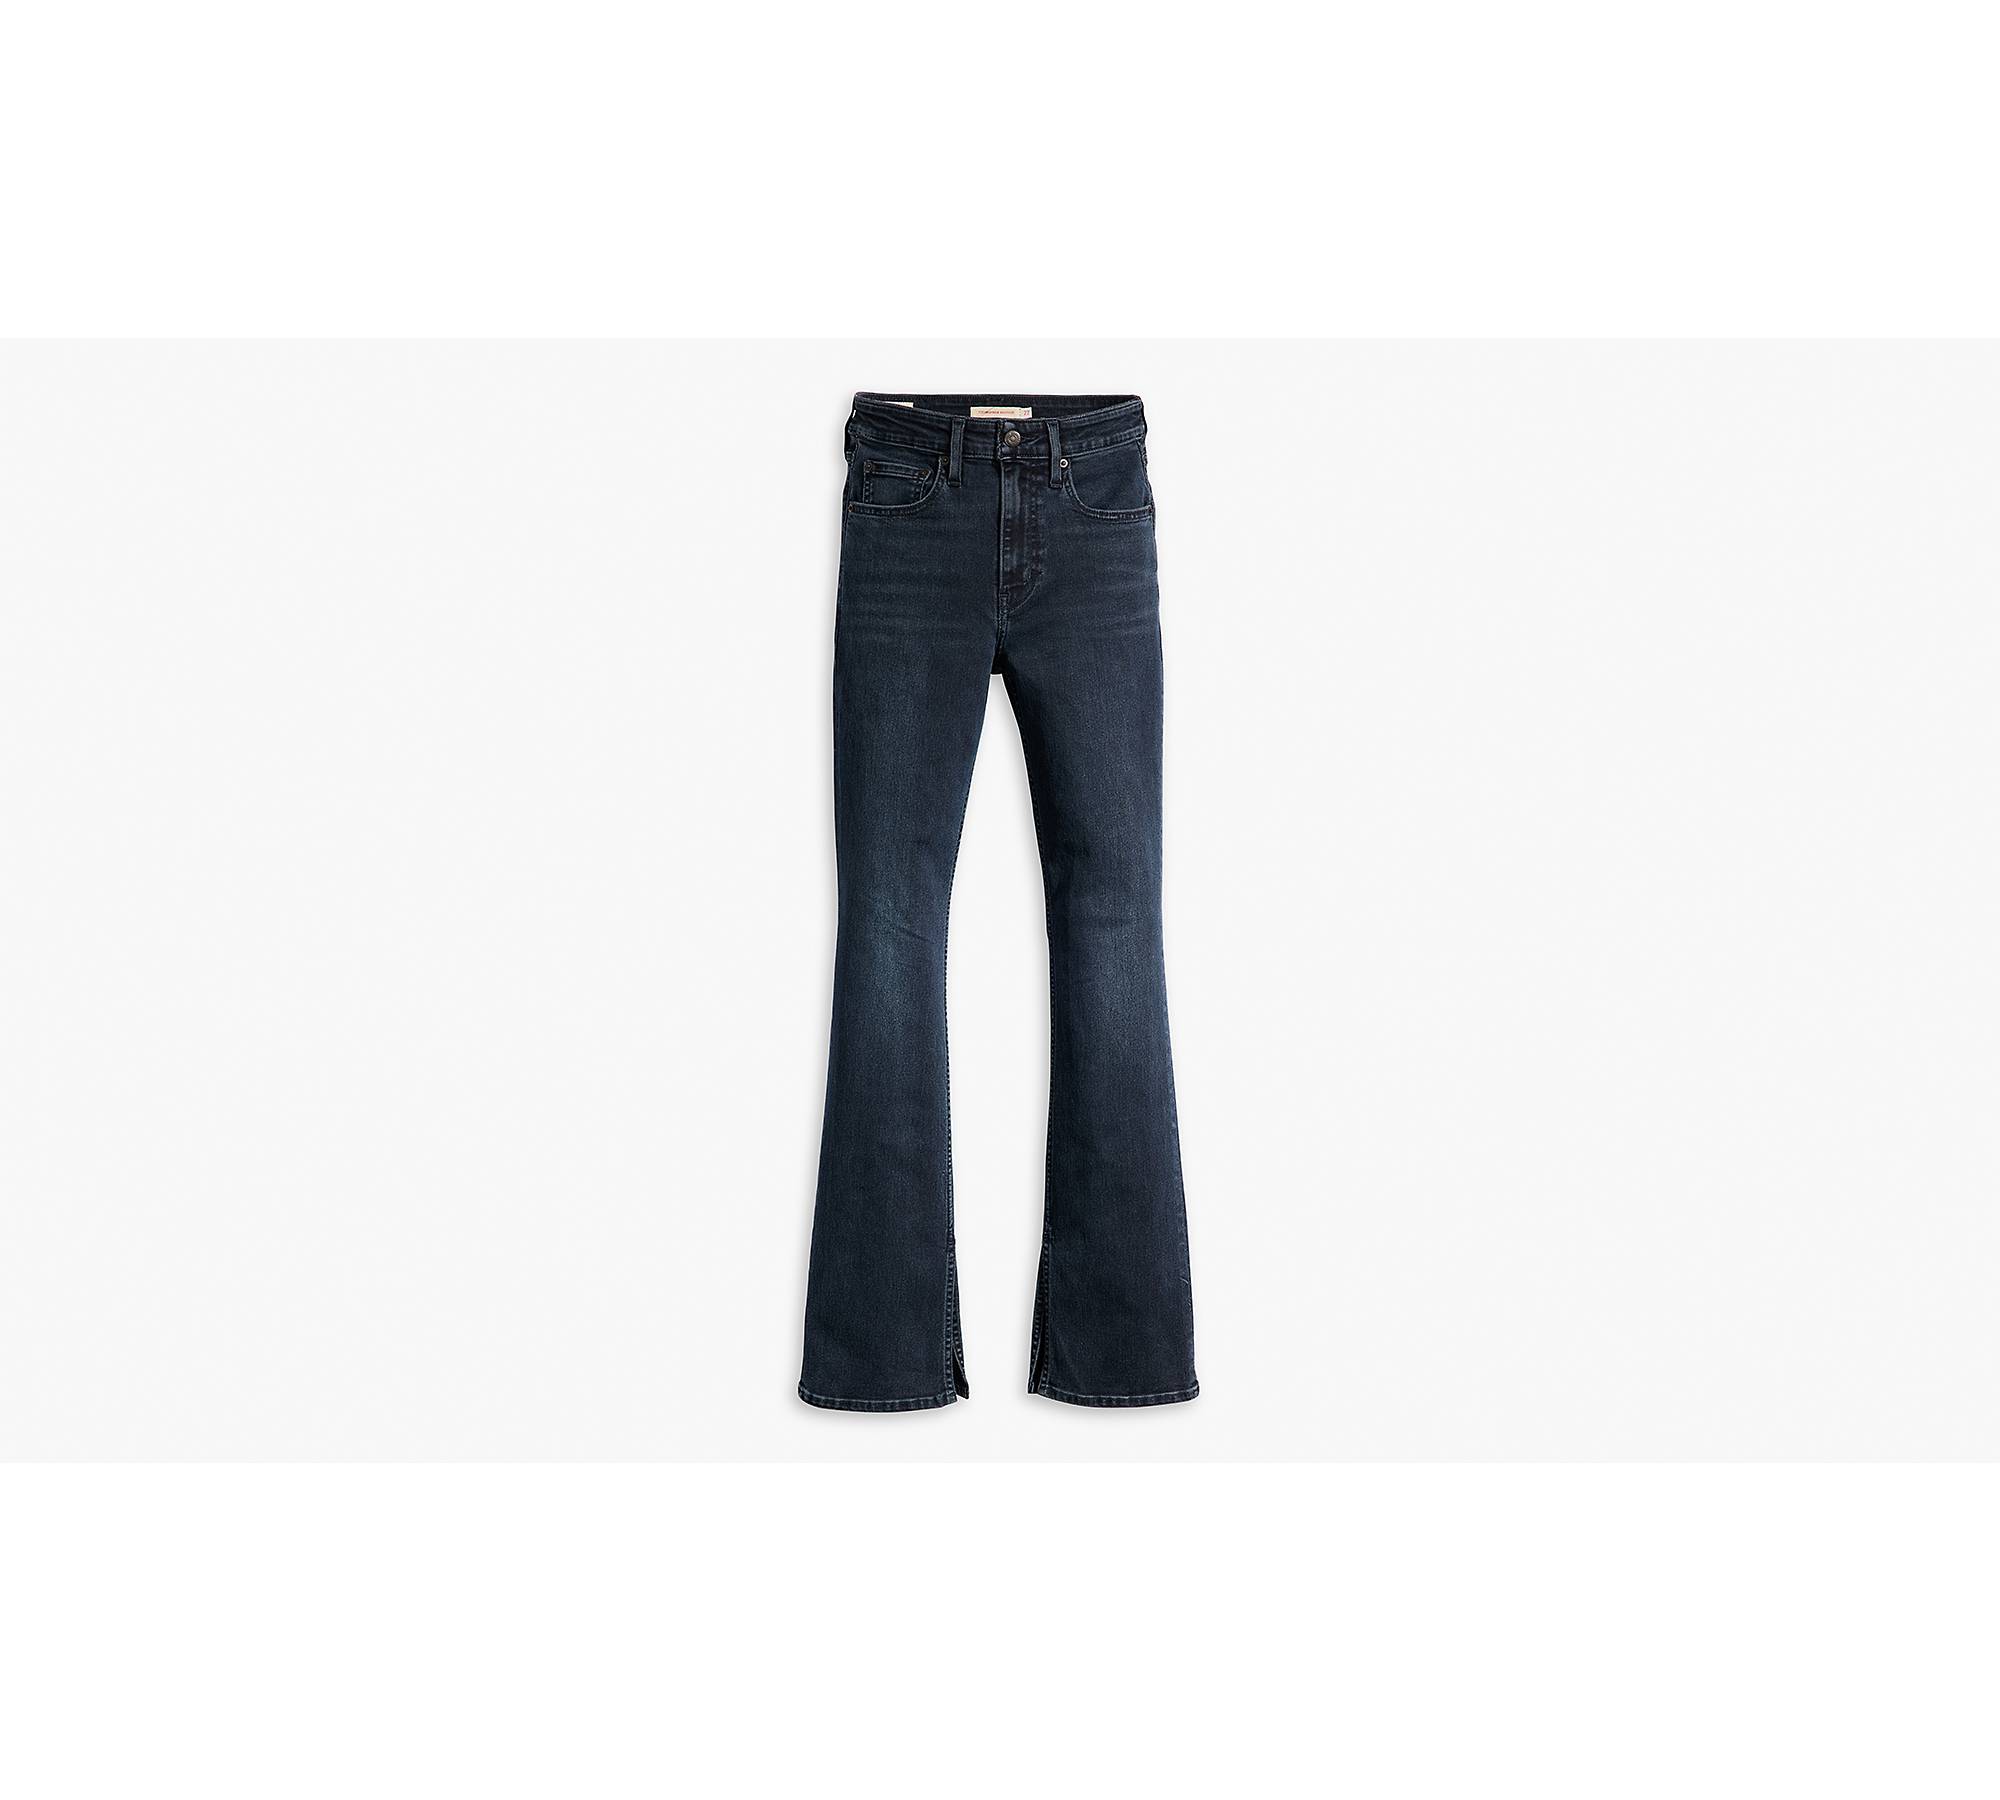 Tall Women's Jeans - Dark Wash Classic Fit Bootcut Tall Women's Jeans - 24  (0) / Ladies' 34